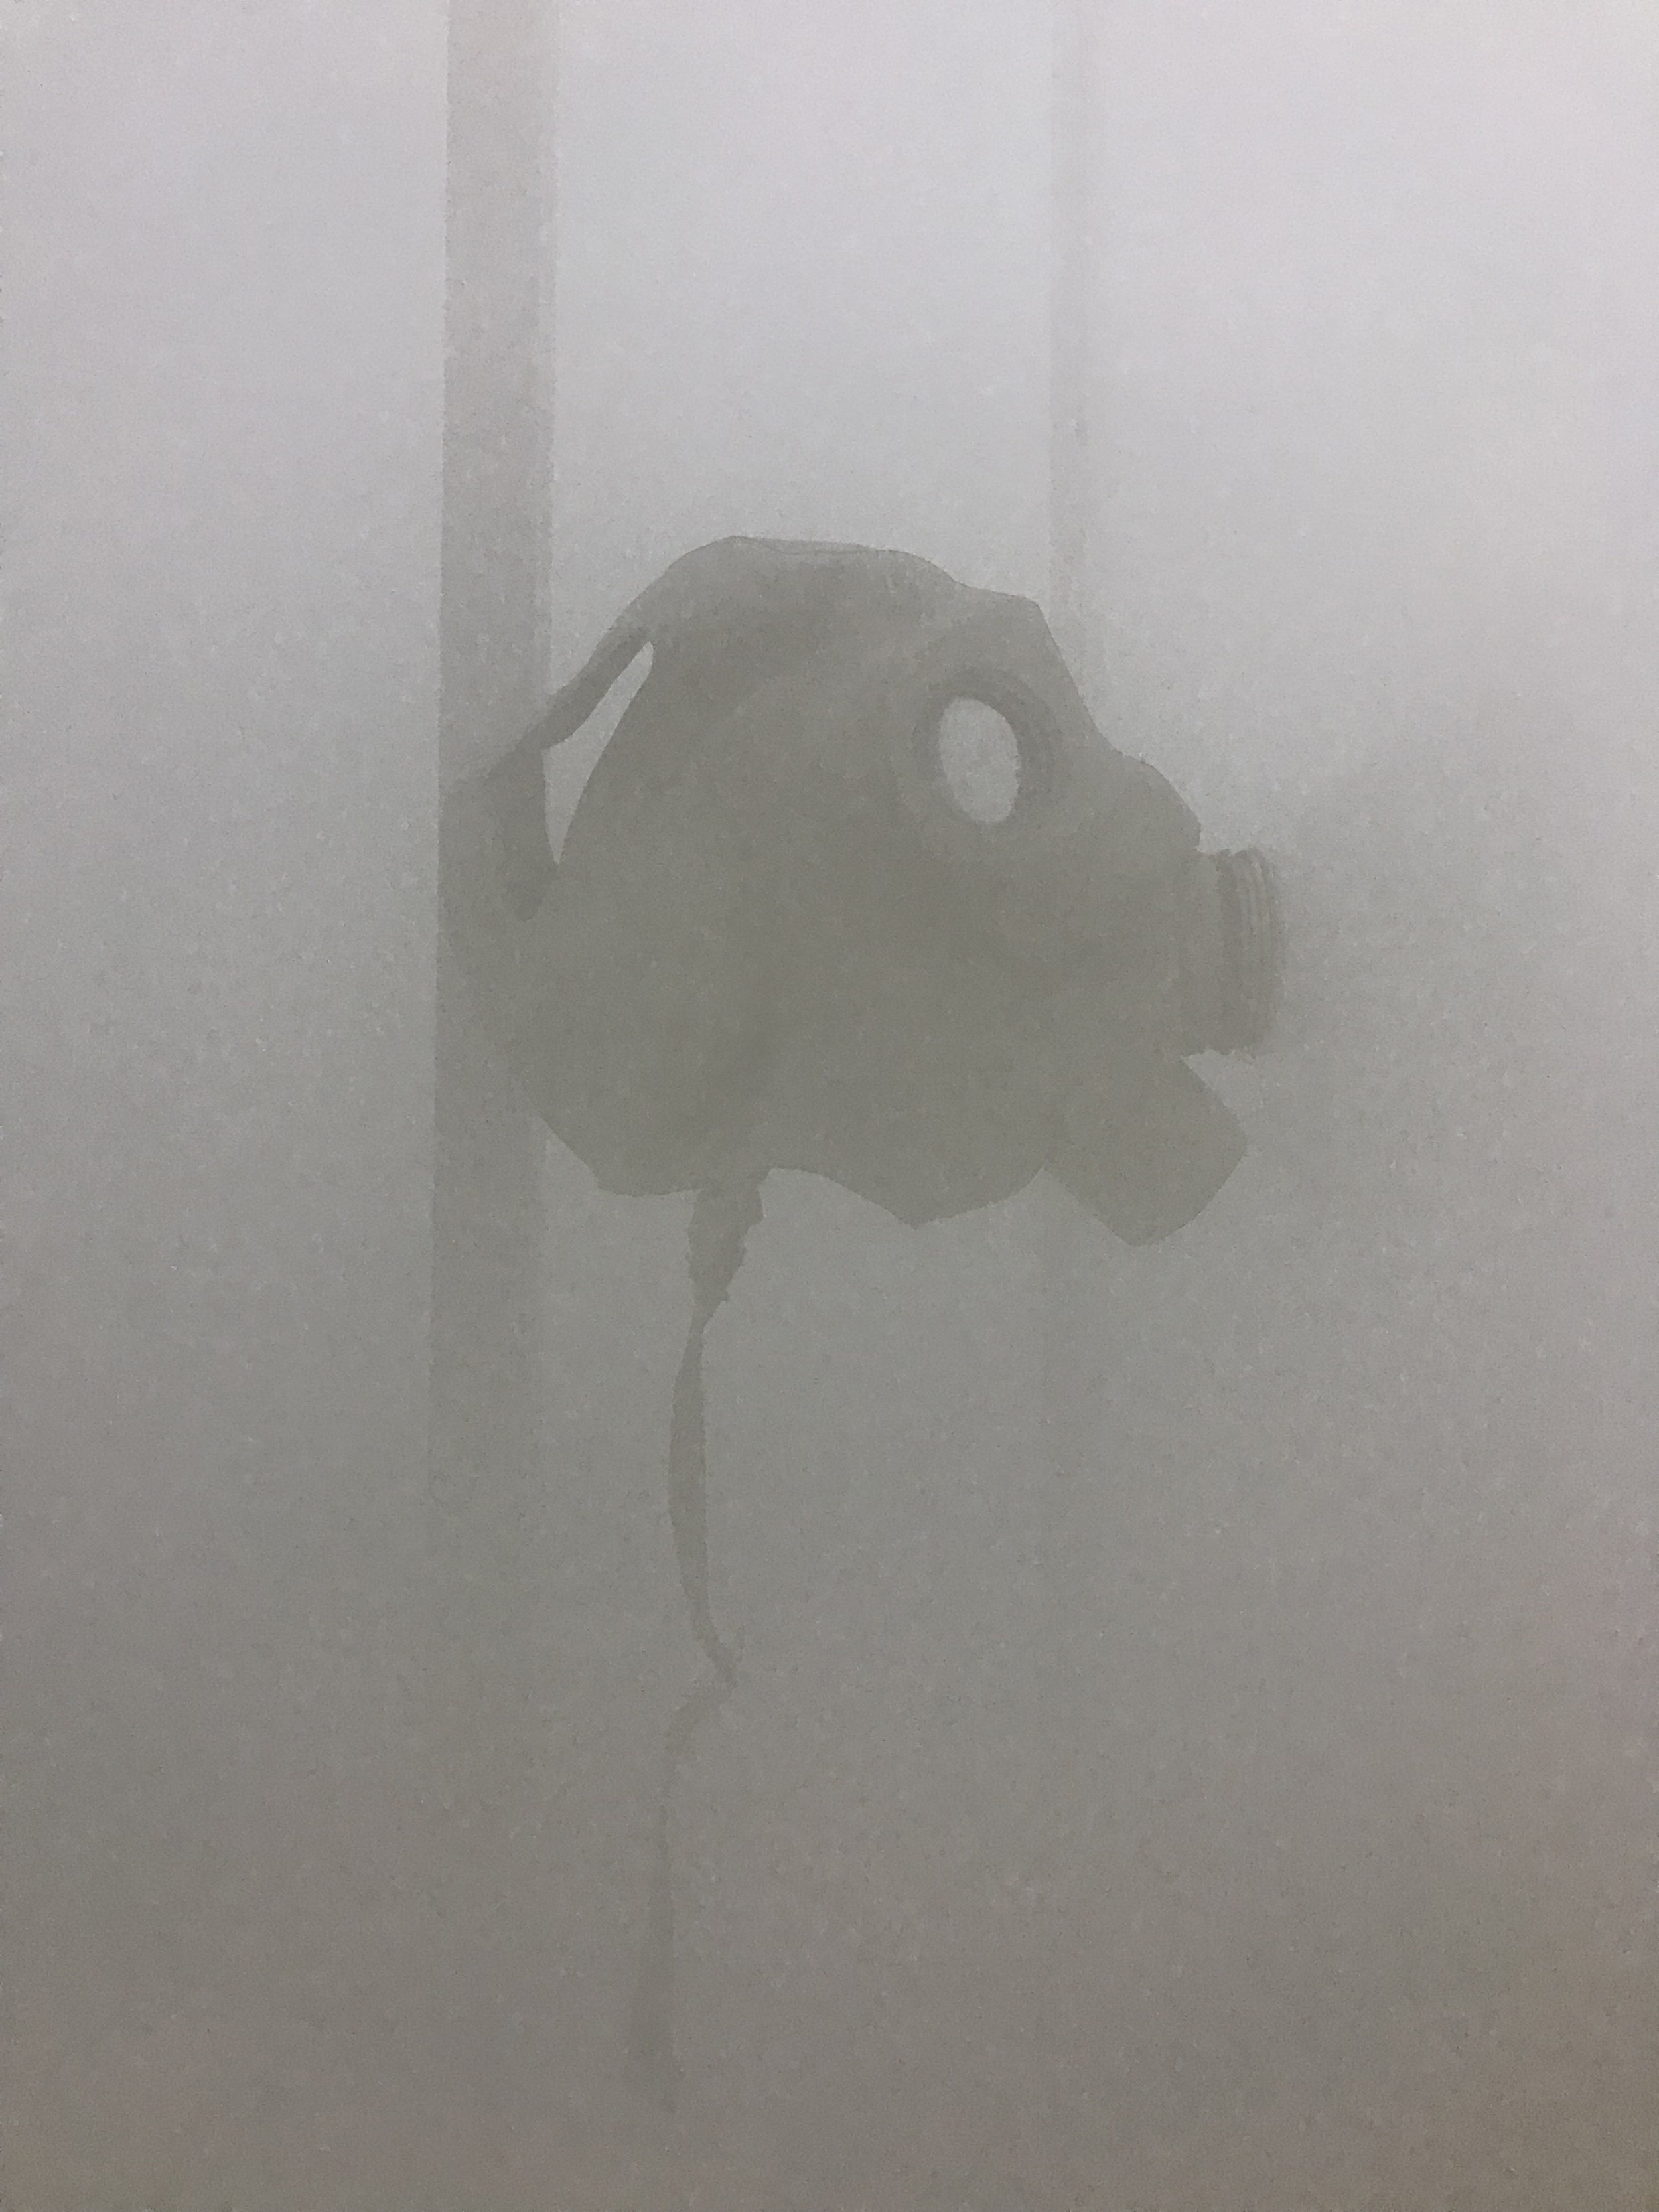  Vladislav Markov  Untitled , 2018 (detail) library shelves, Plexiglas, polyurethane engine cast, gas mask, fog machine,  plastic hose, self-adhesive carpet protector film 84 x 84 x 24 inches (213 x 213 x 61 cm) (VM3) 